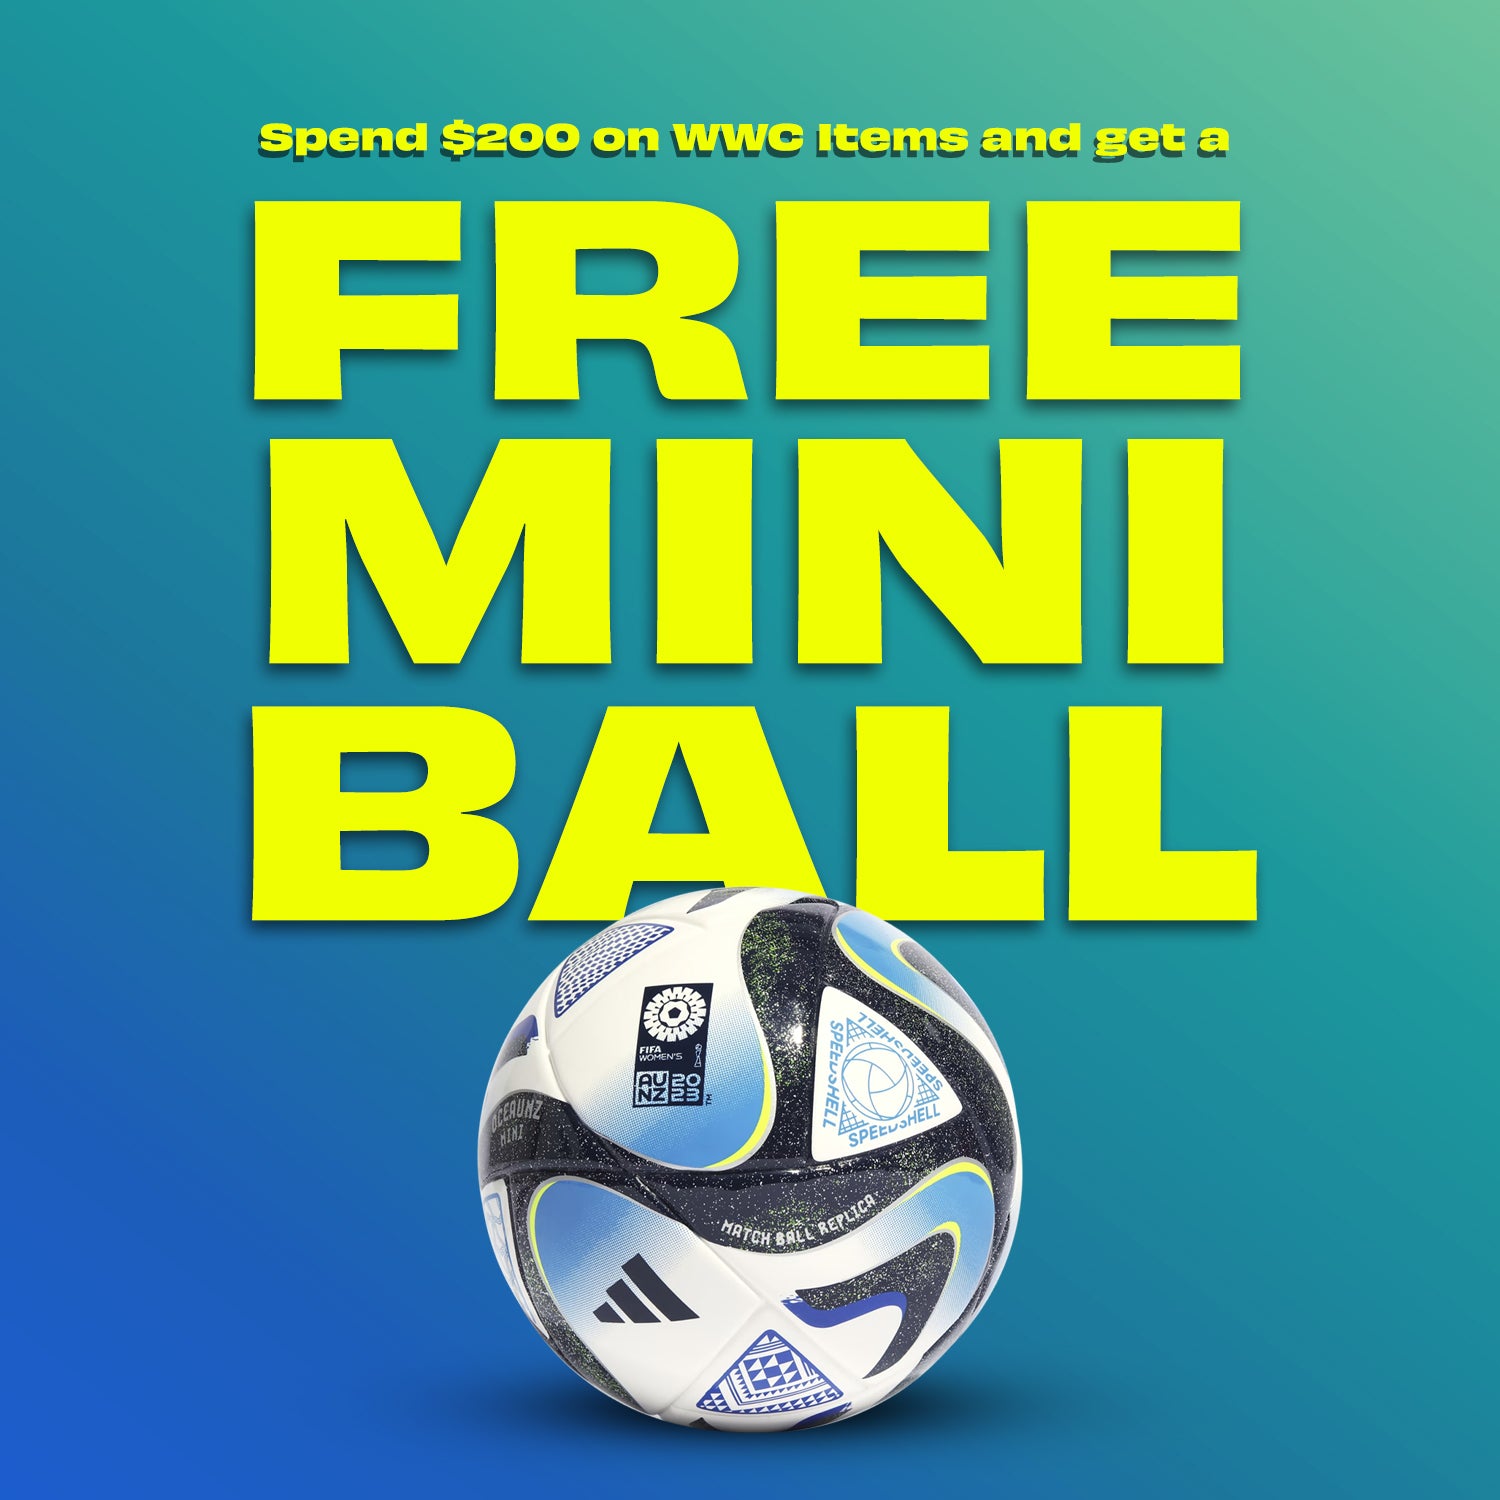 Want a Free WWC Mini Ball?